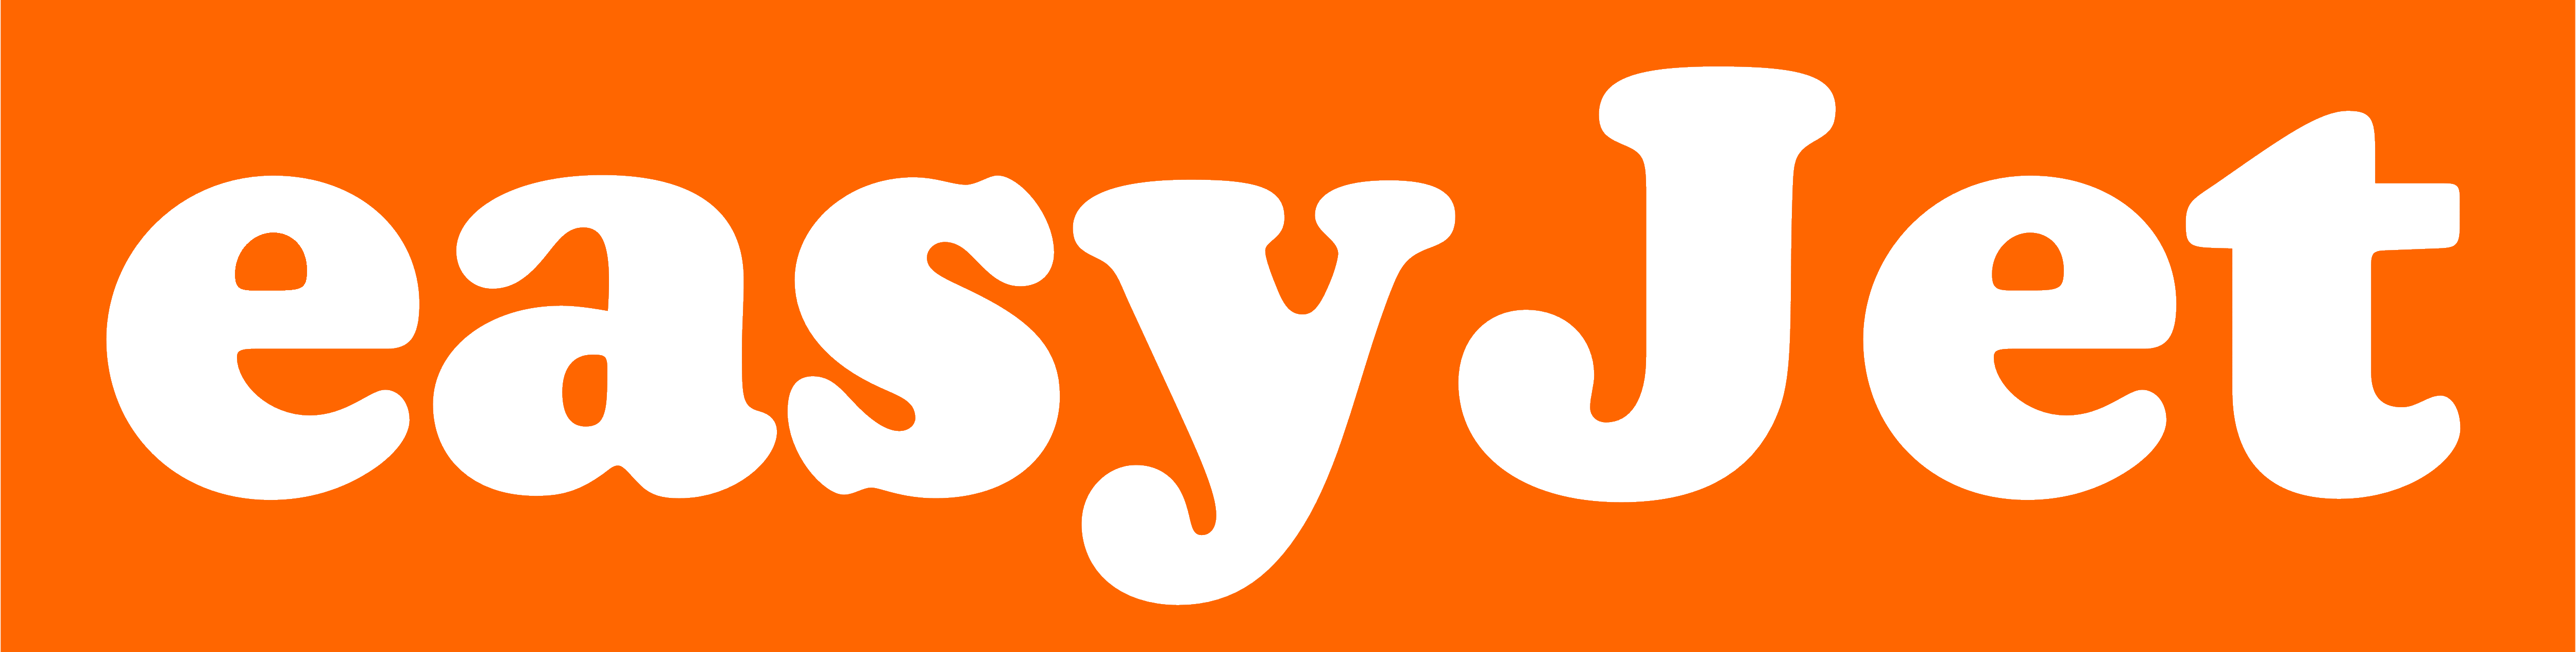 easyJet Logo (Transparent)